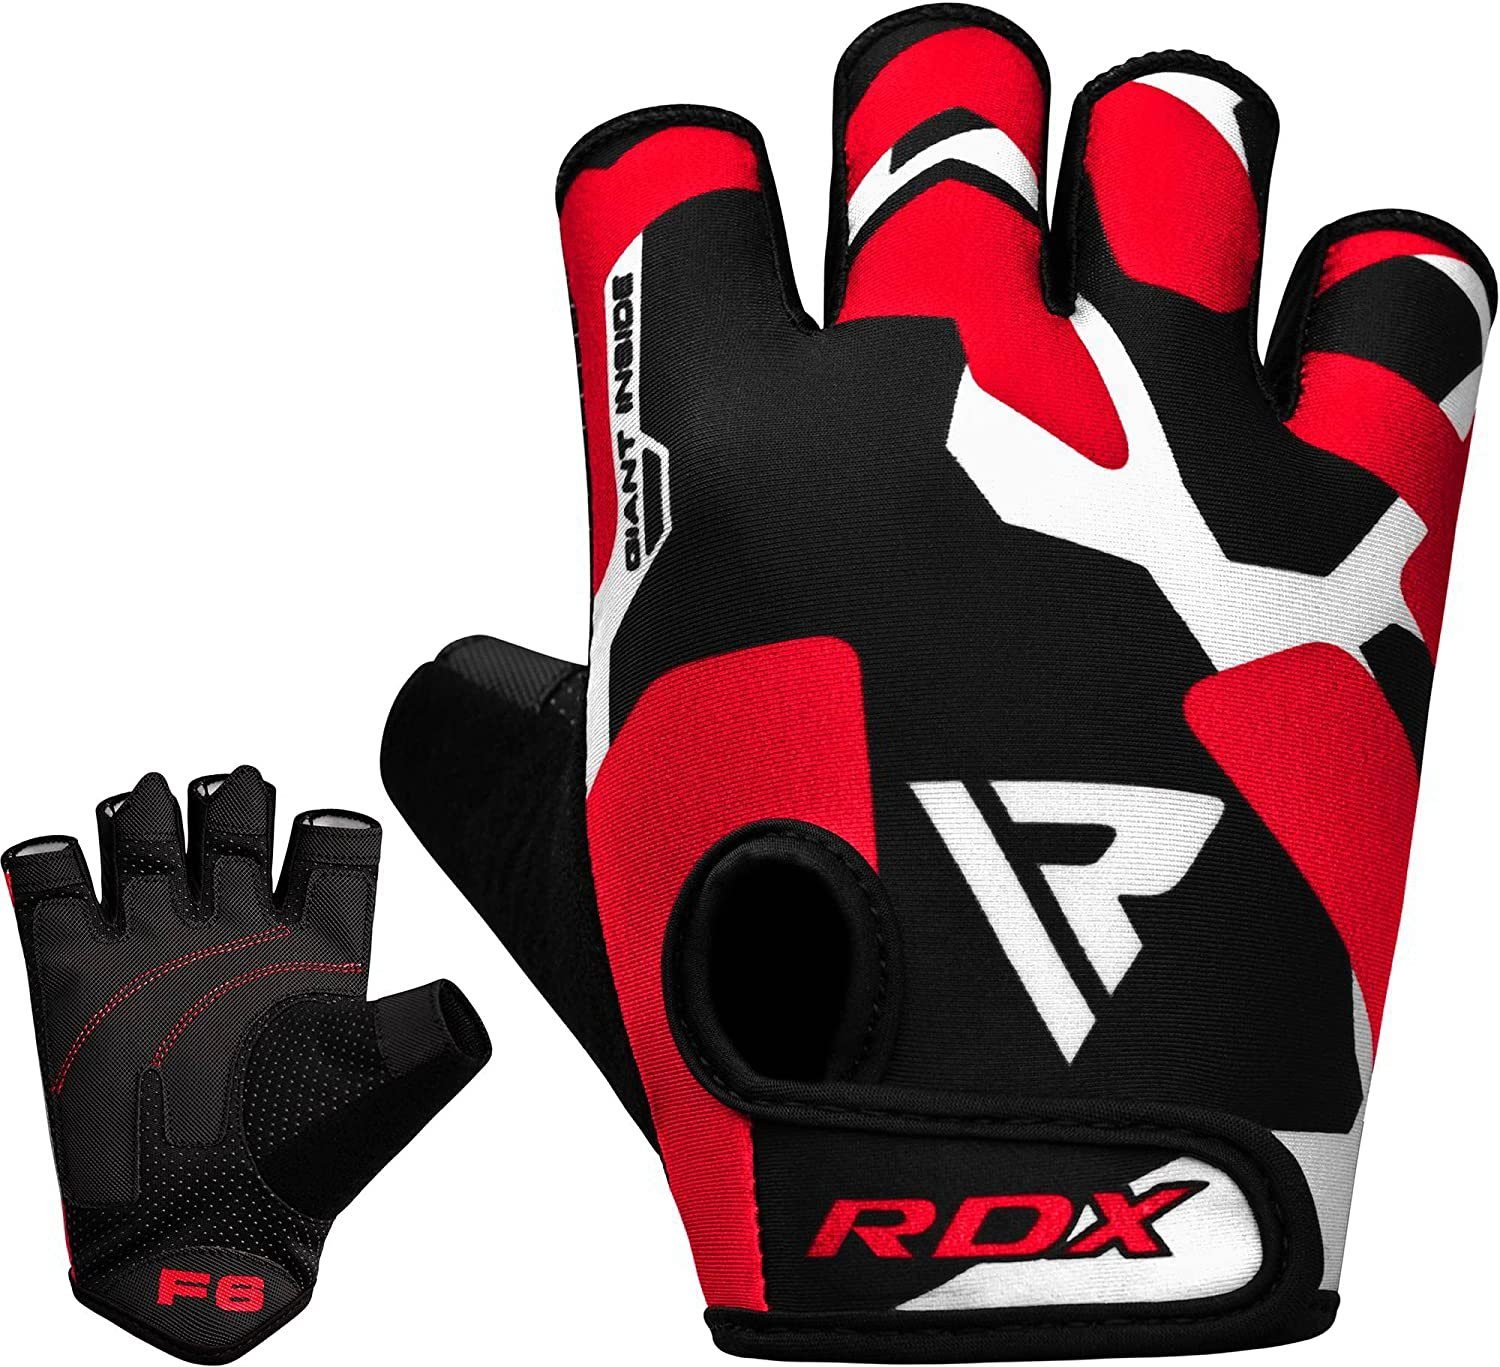 RDX Trainingshandschuhe RDX Fitness Trainingshandschuhe, Handschuhe, Handgelenkschutz Workout RED